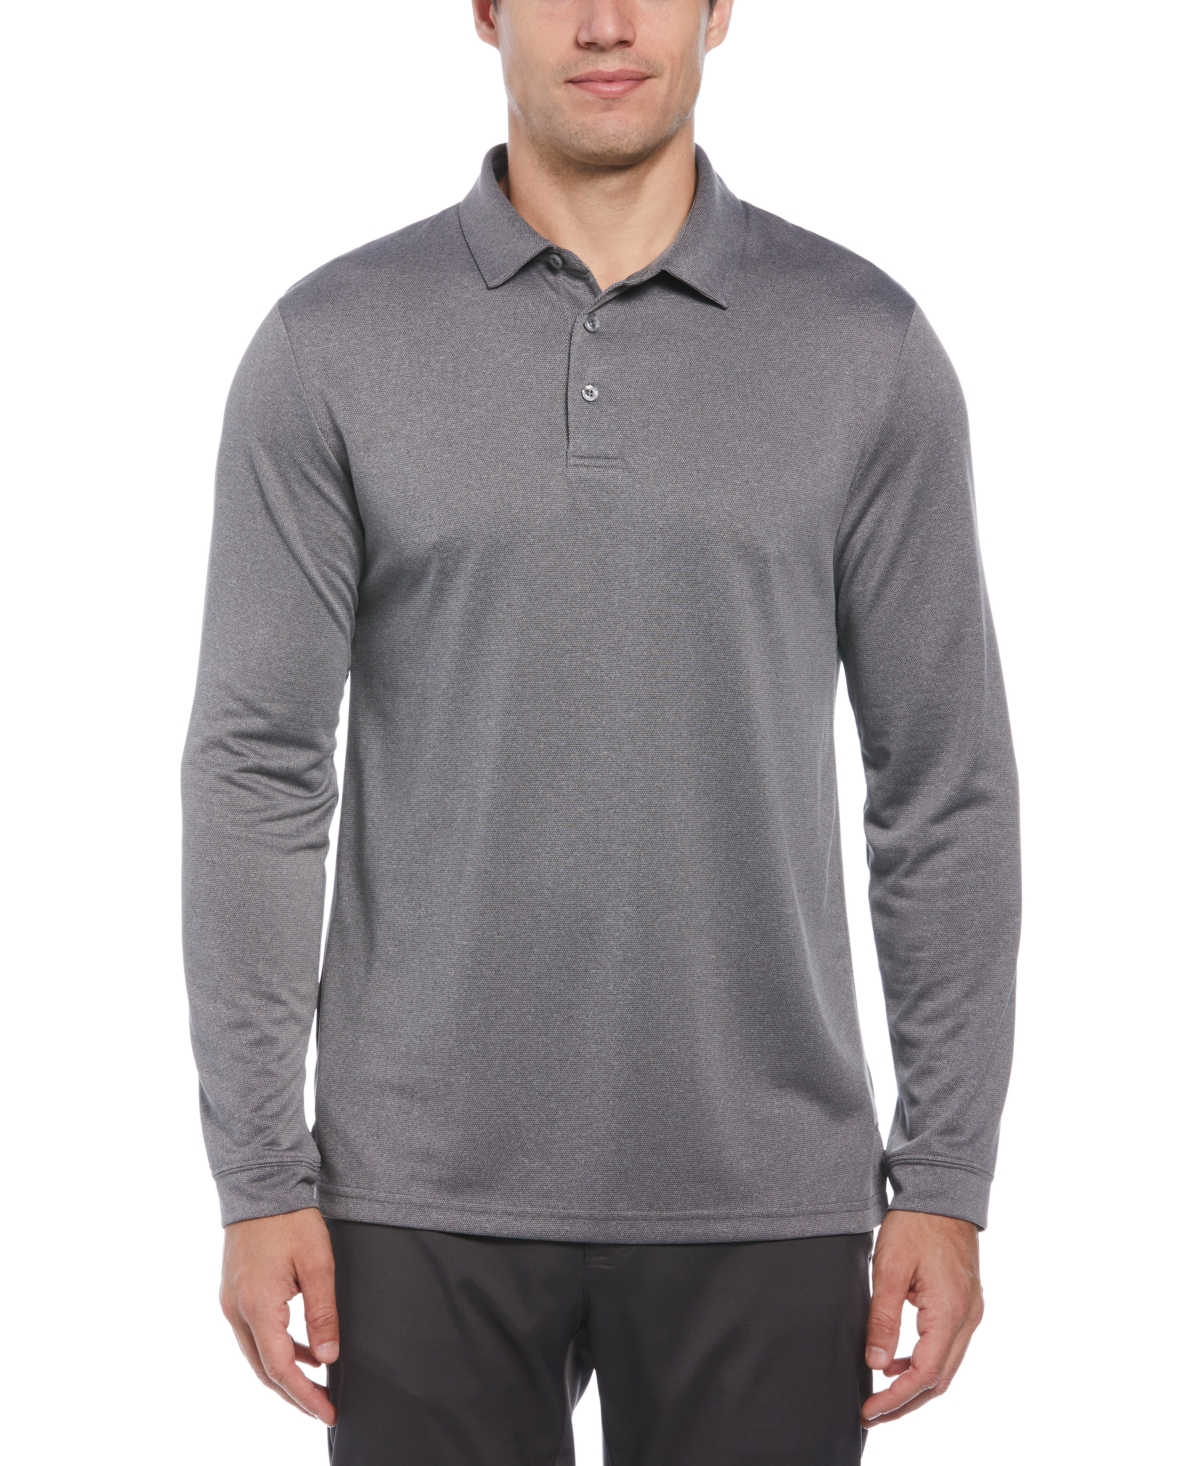 Men's Micro Birdseye Long Sleeve Golf Polo Shirt - Seaport Heather